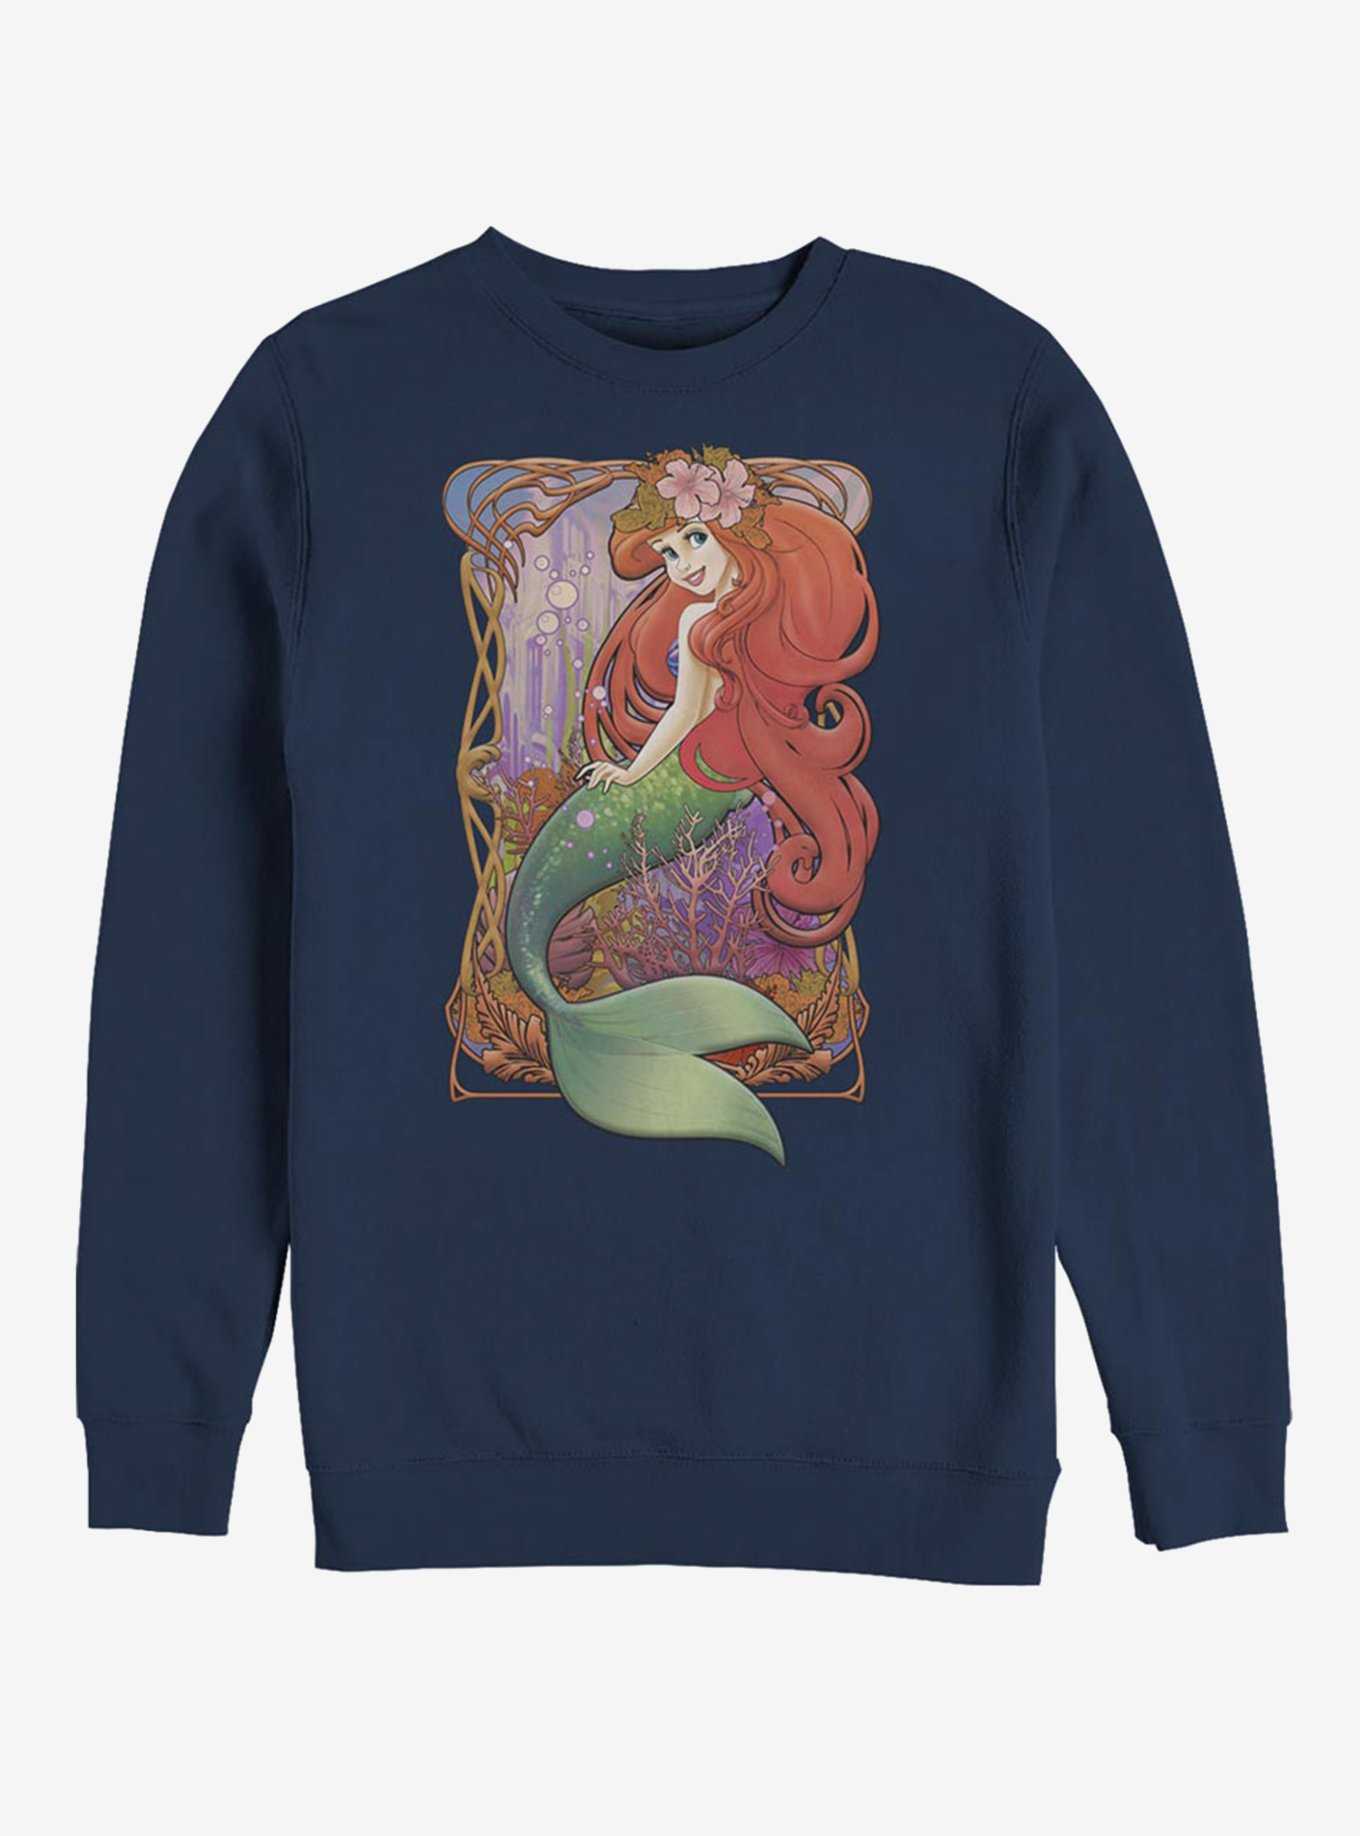 Disney The Little Mermaid Glamorous Ariel Crew Sweatshirt, , hi-res